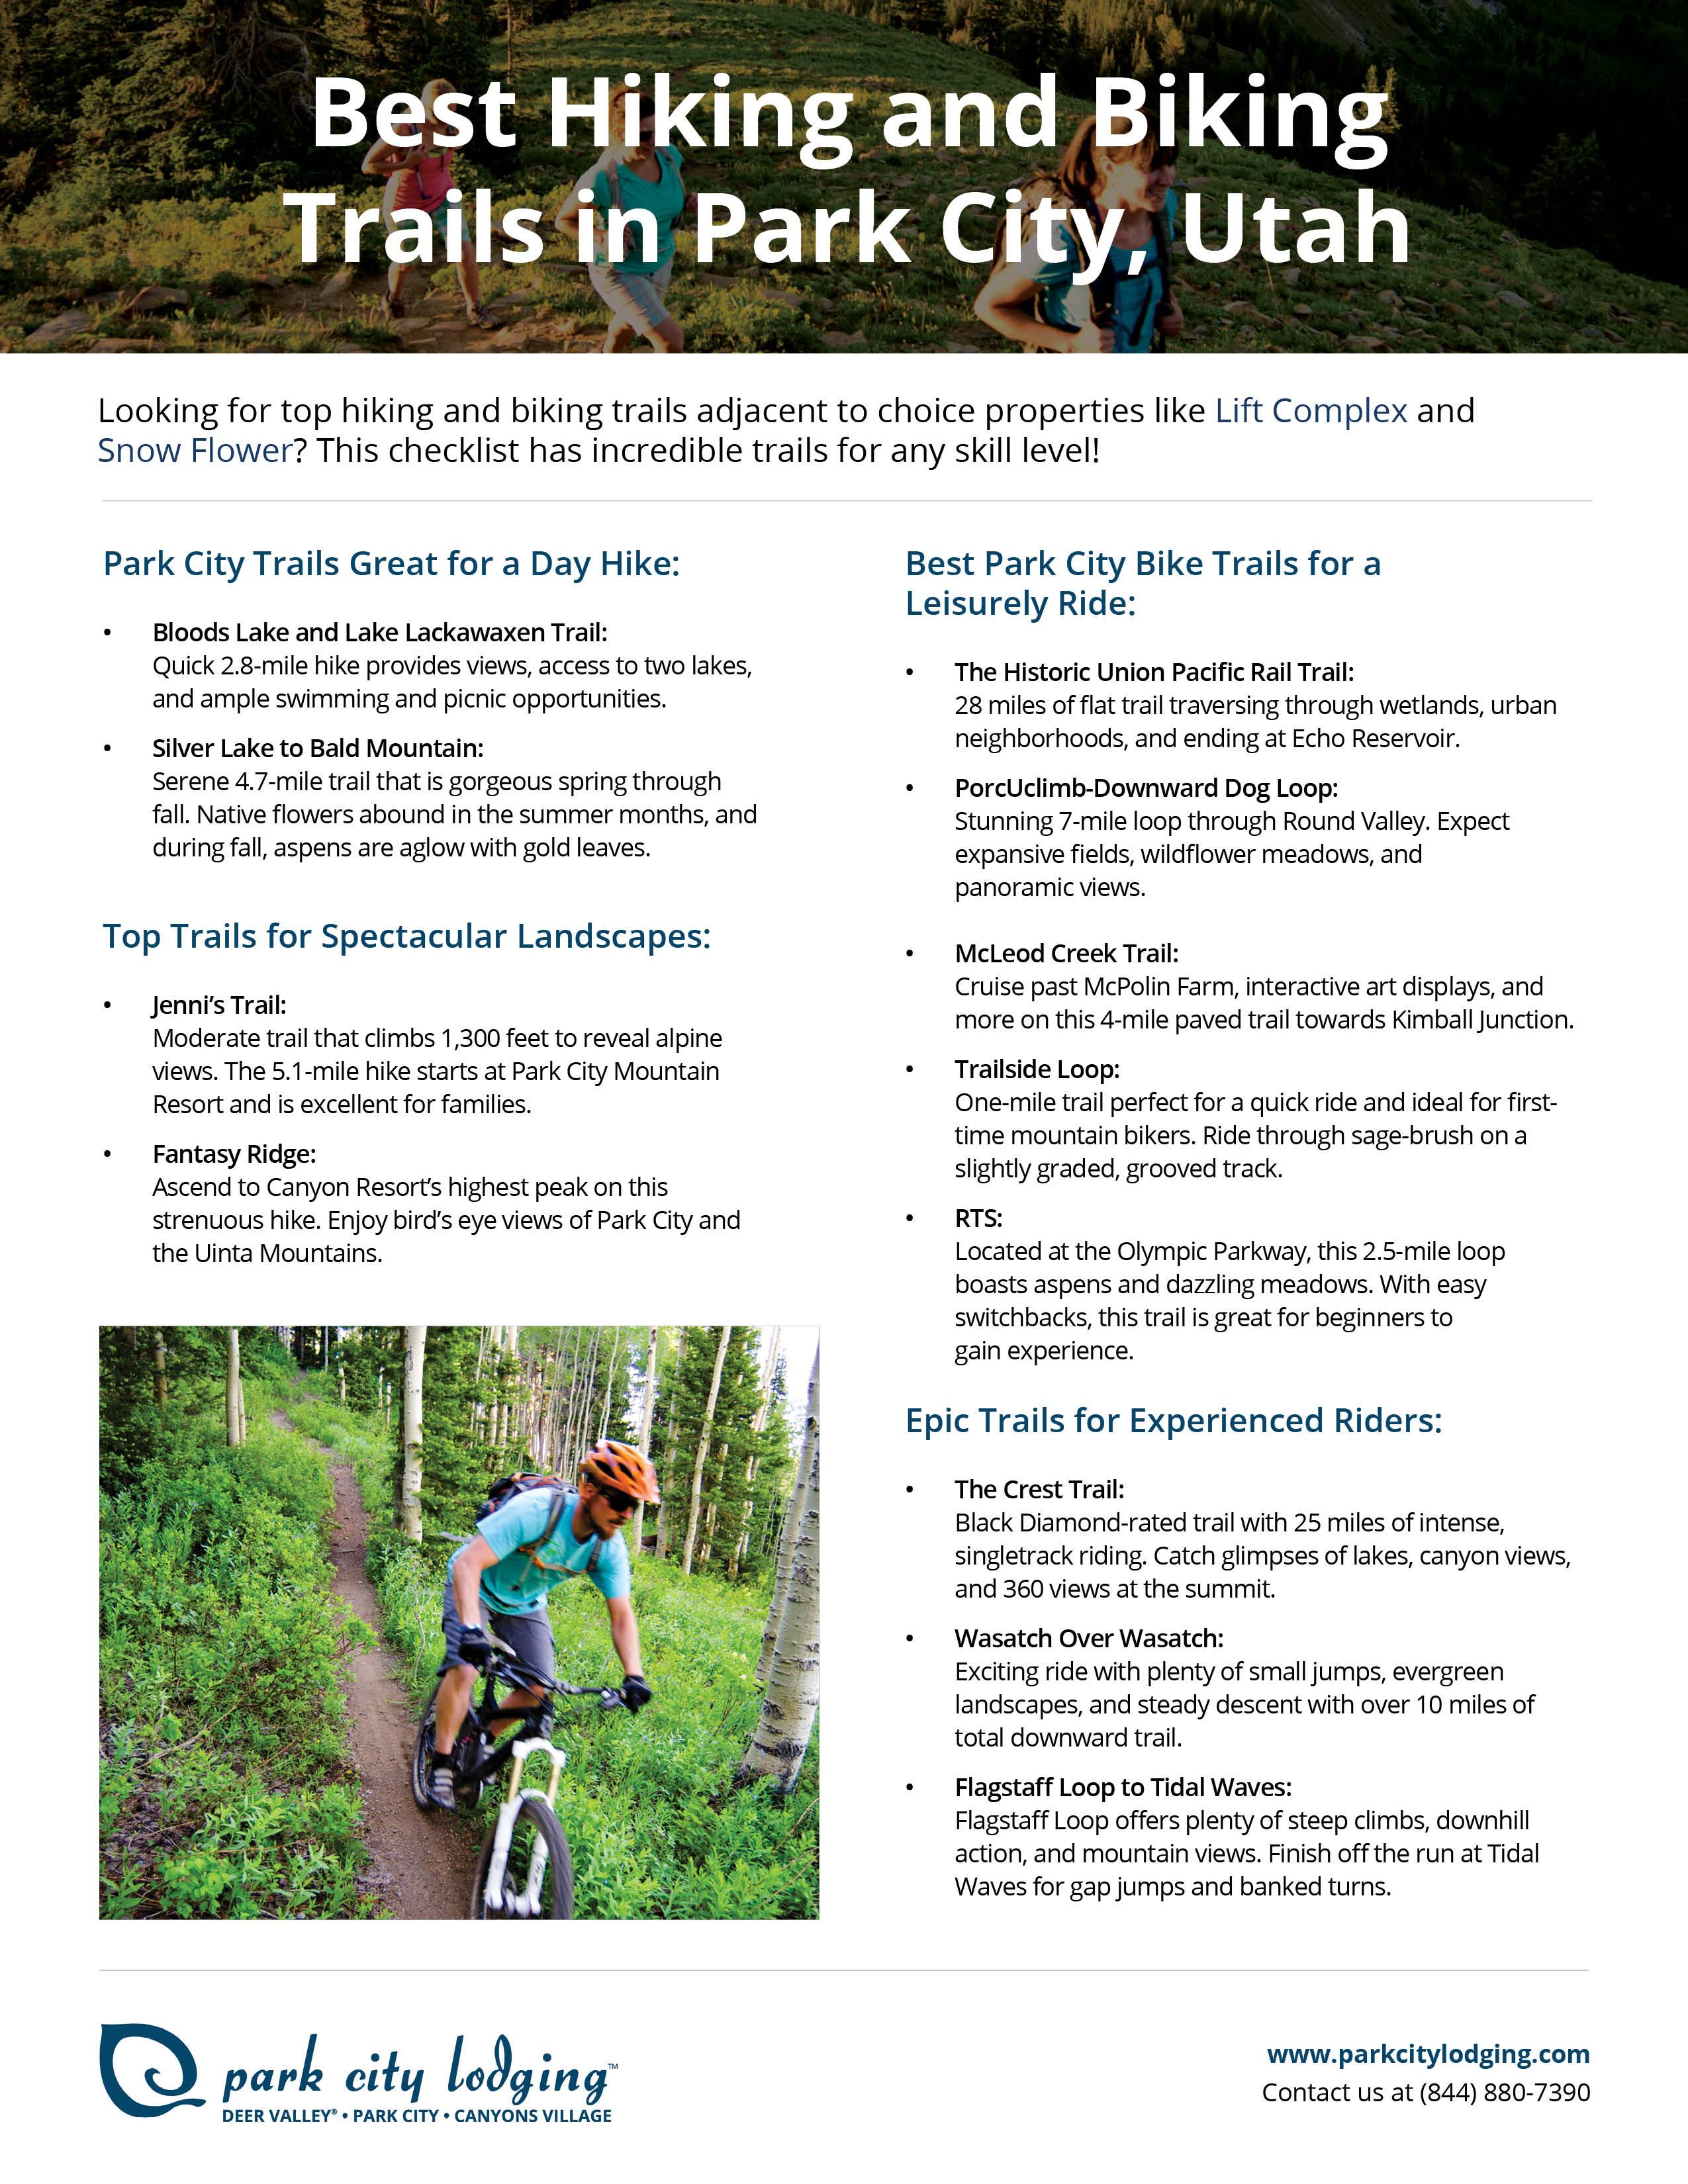 The Best Park City Hiking and Biking Trails Checklist